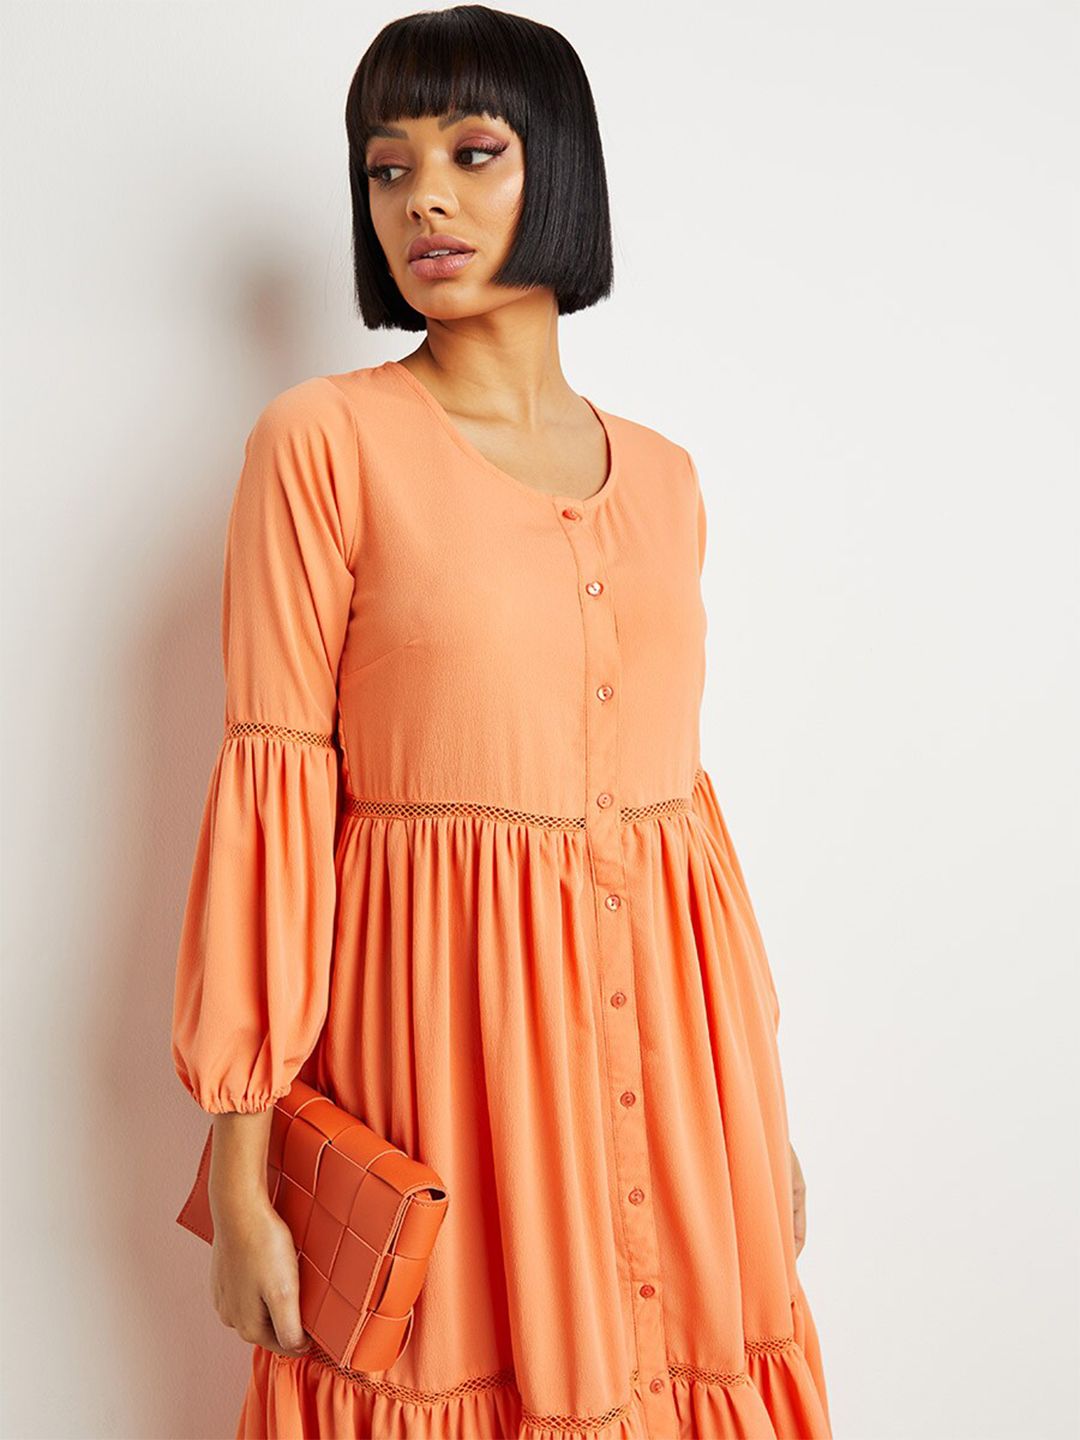 Styli Peach-Coloured Maxi Dress Price in India